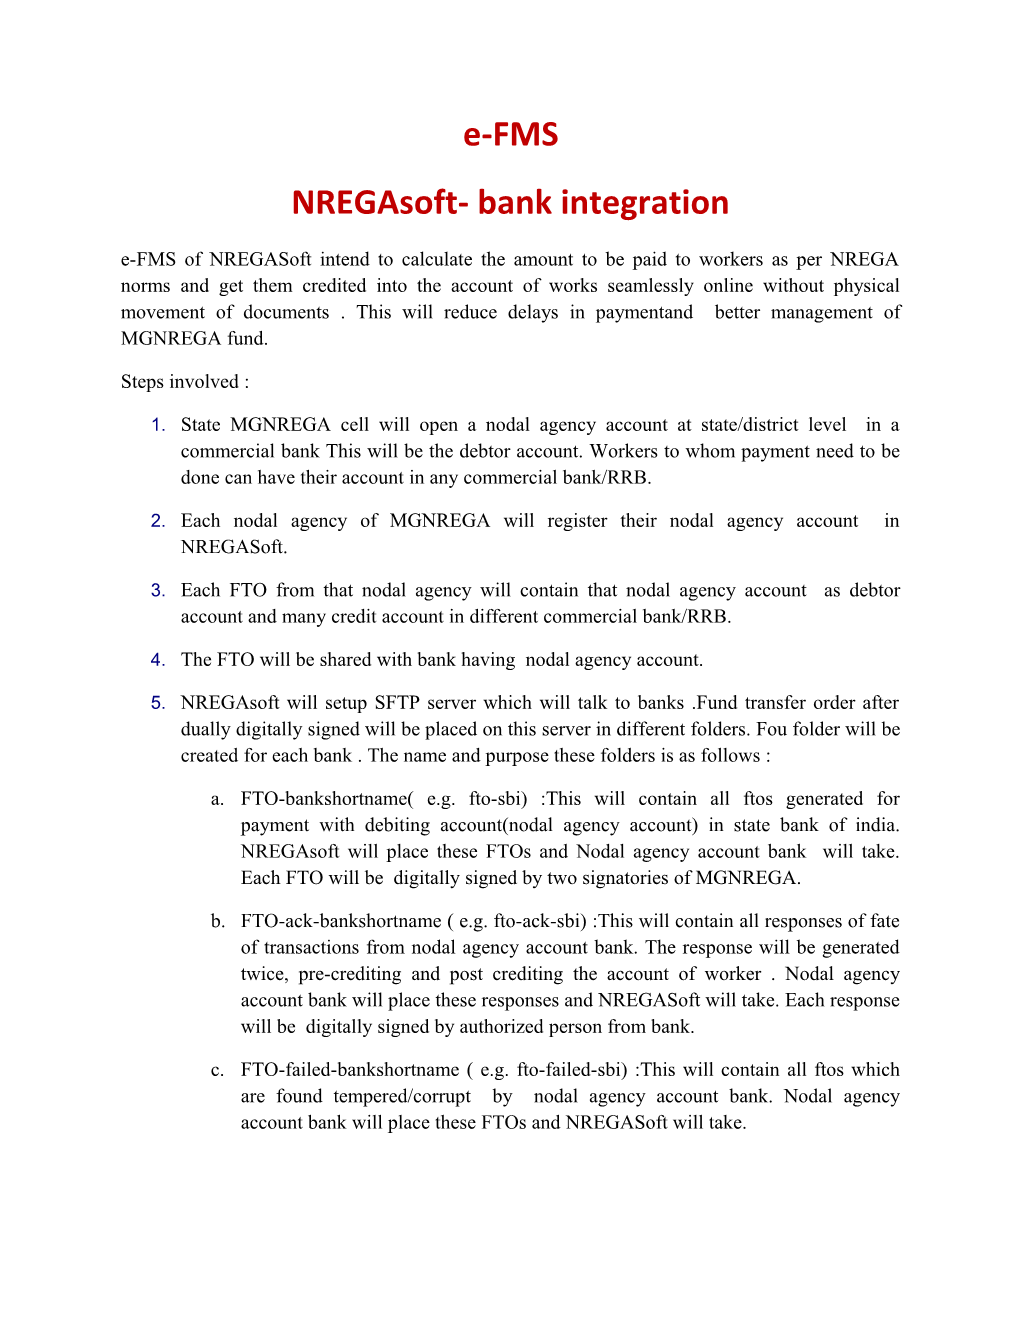 Nregasoft- Bank Integration